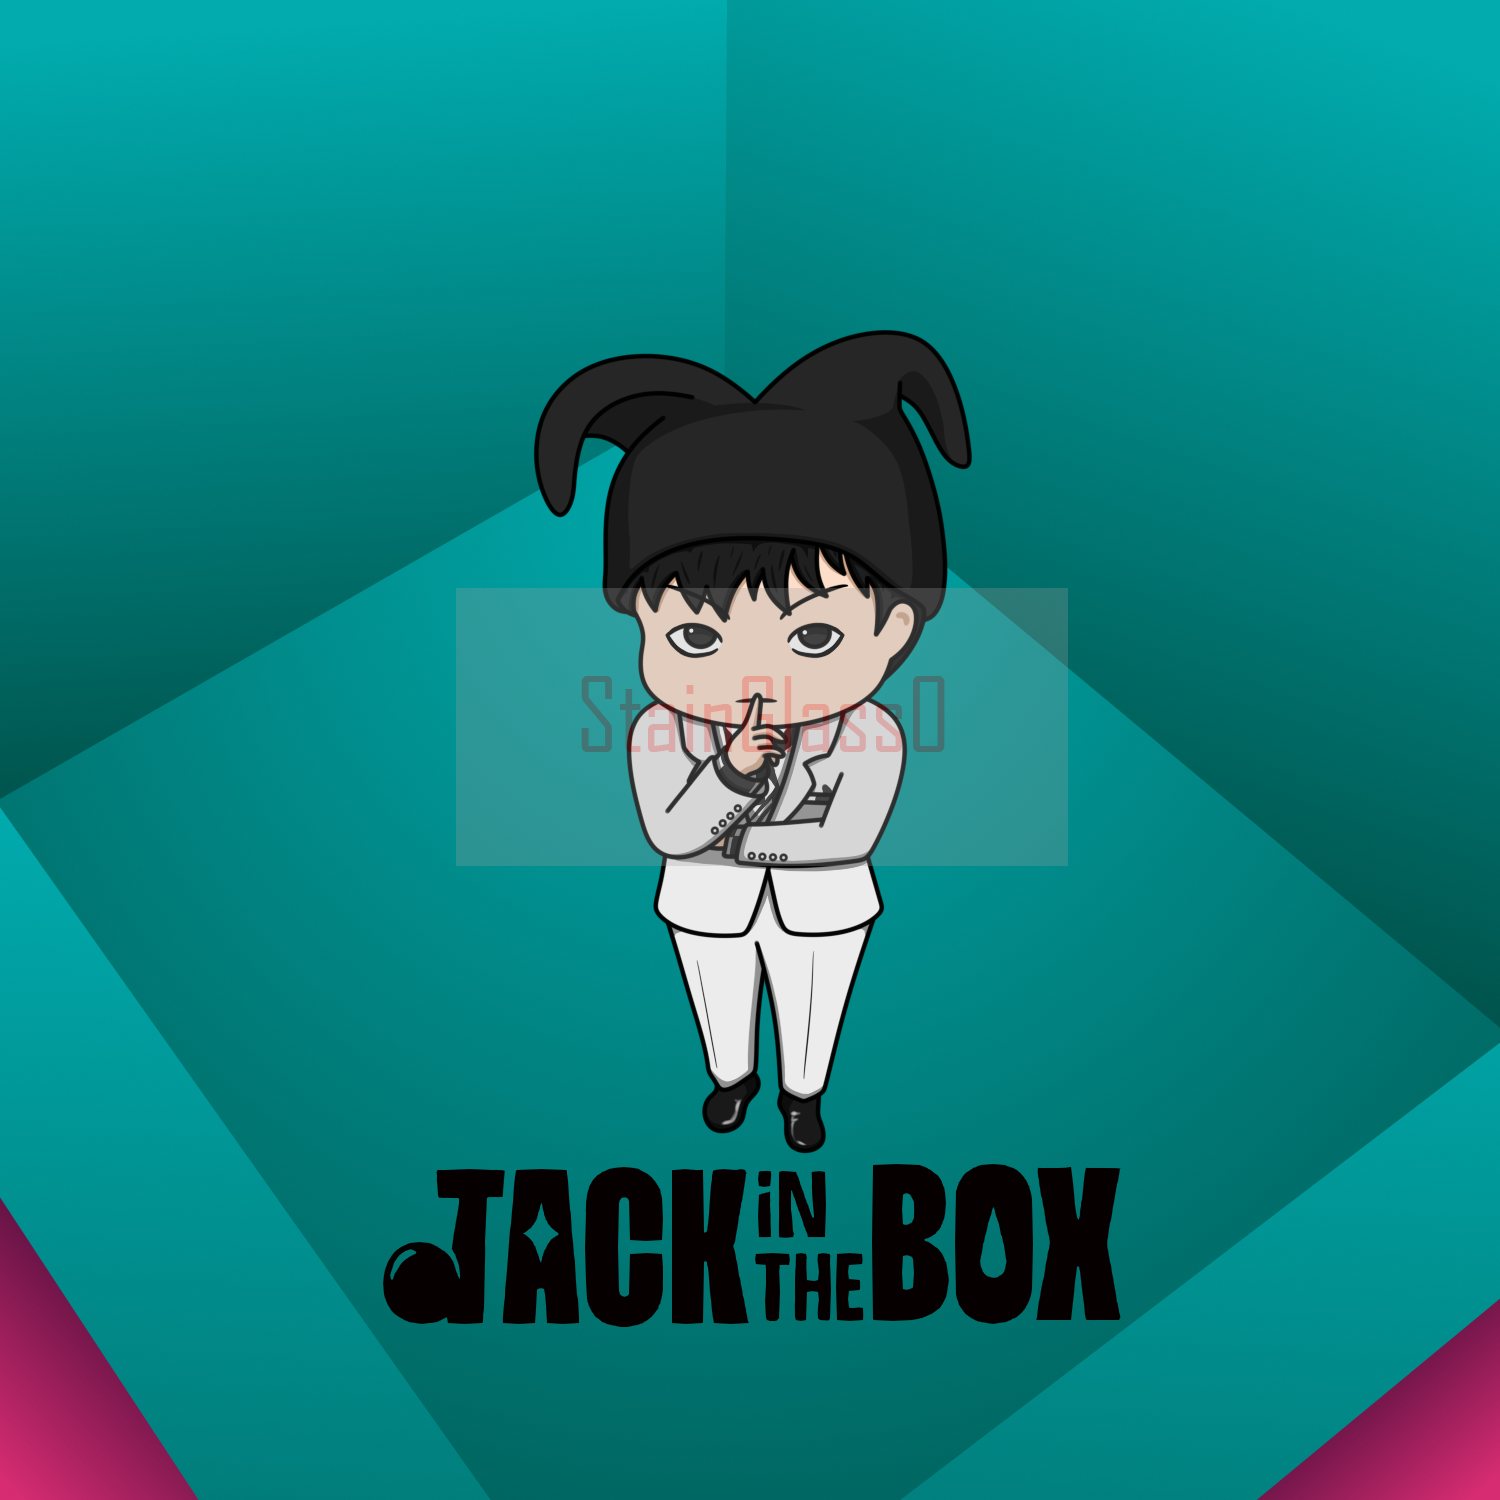 jack in the box  jhope by monorbit on DeviantArt